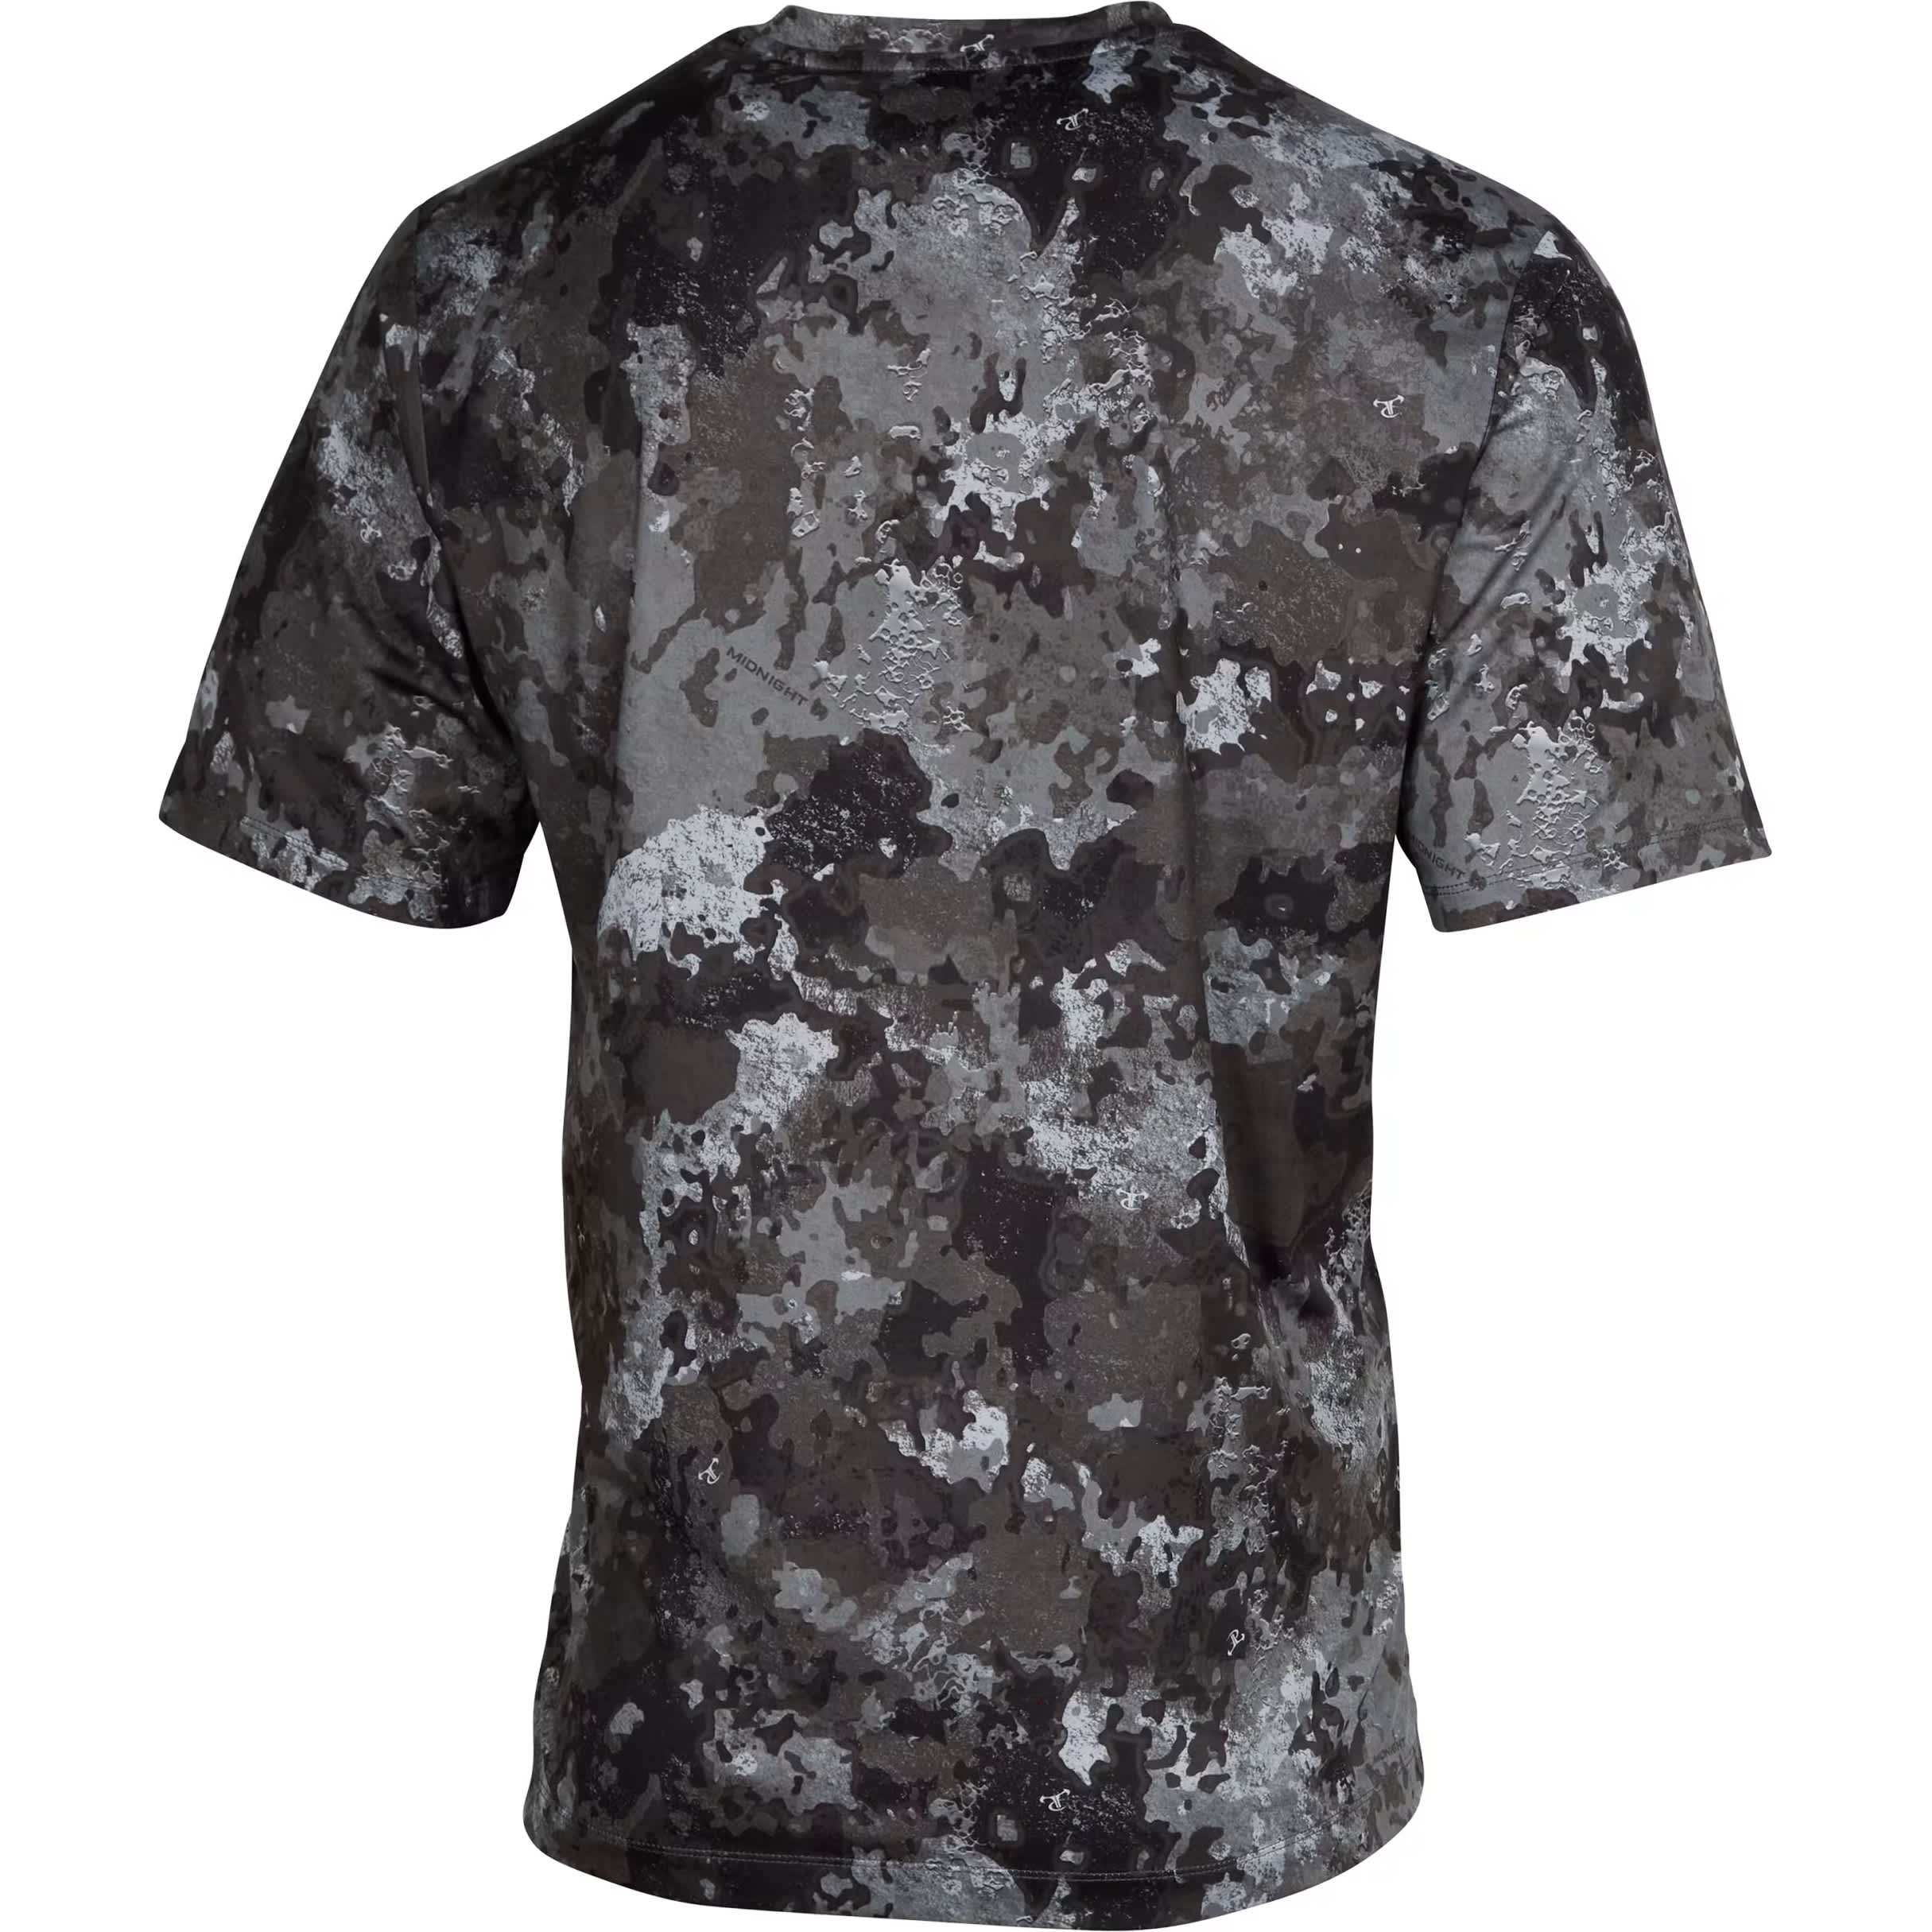 Bass Pro Shops TGIF Short-Sleeve T-Shirt for Men -Heather Gray